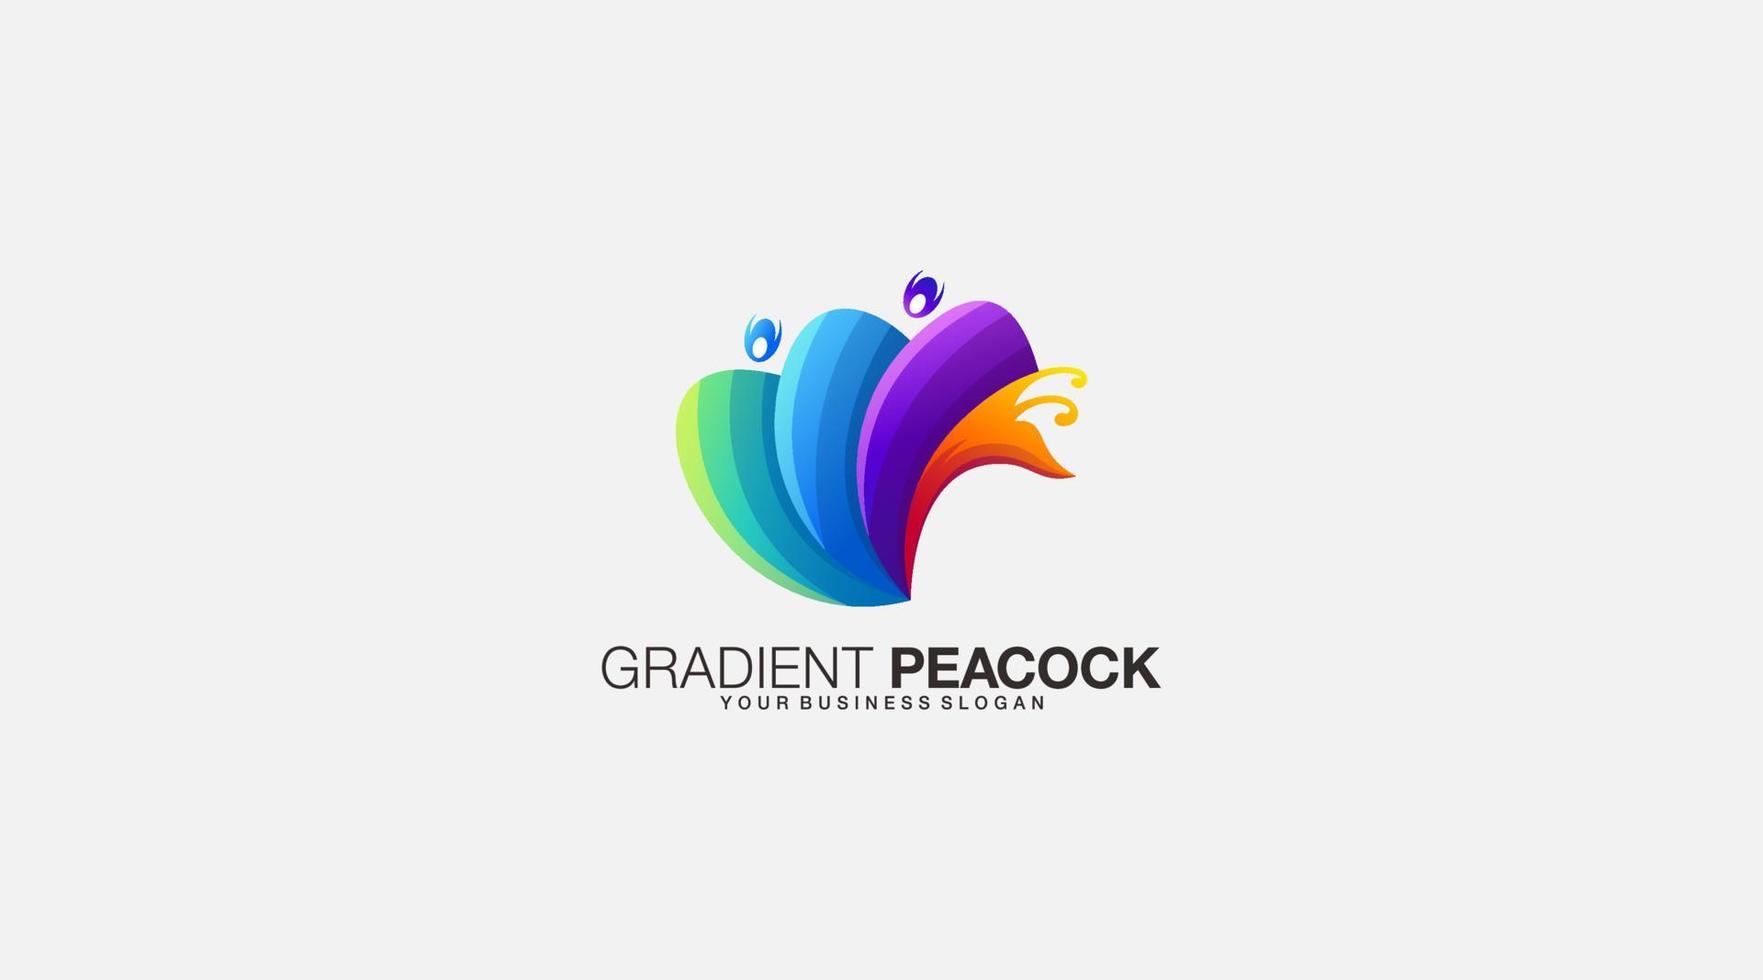 Gradient peacock vector illustration logo design